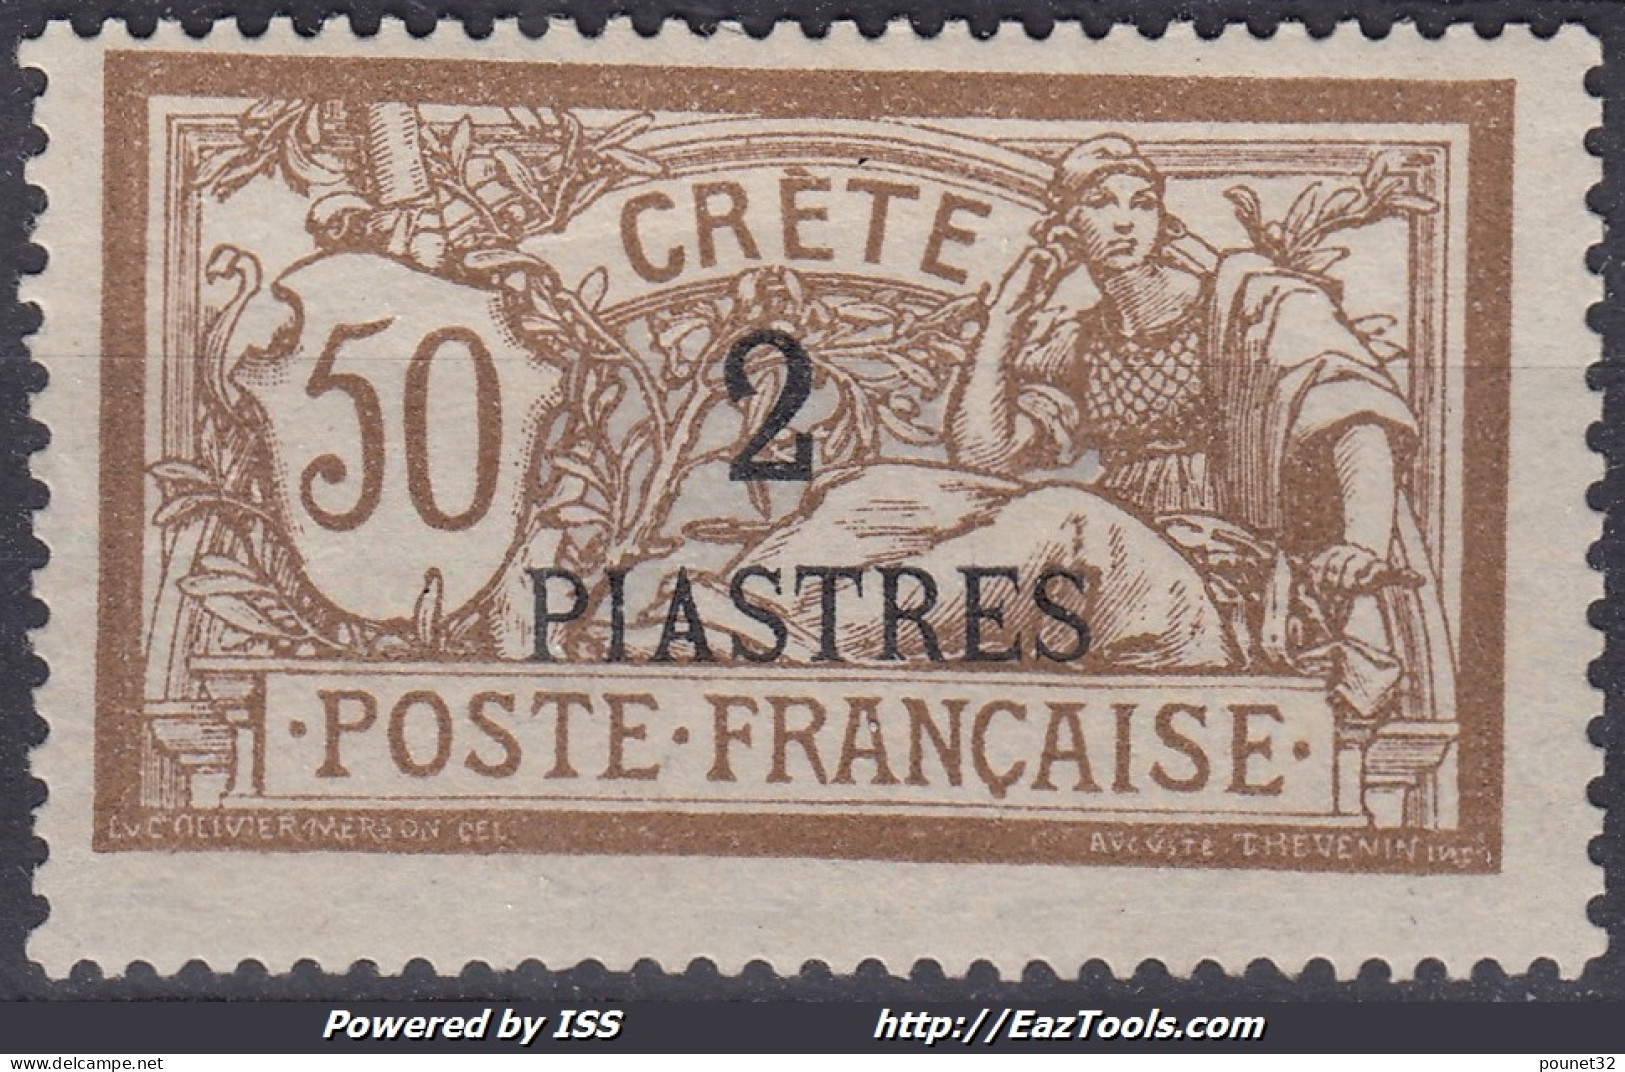 CRETE : MERSON N° 17 NEUF * GOMME AVEC CHARNIERE - VARIETE PIQUAGE - SIGNE BRUN - Unused Stamps